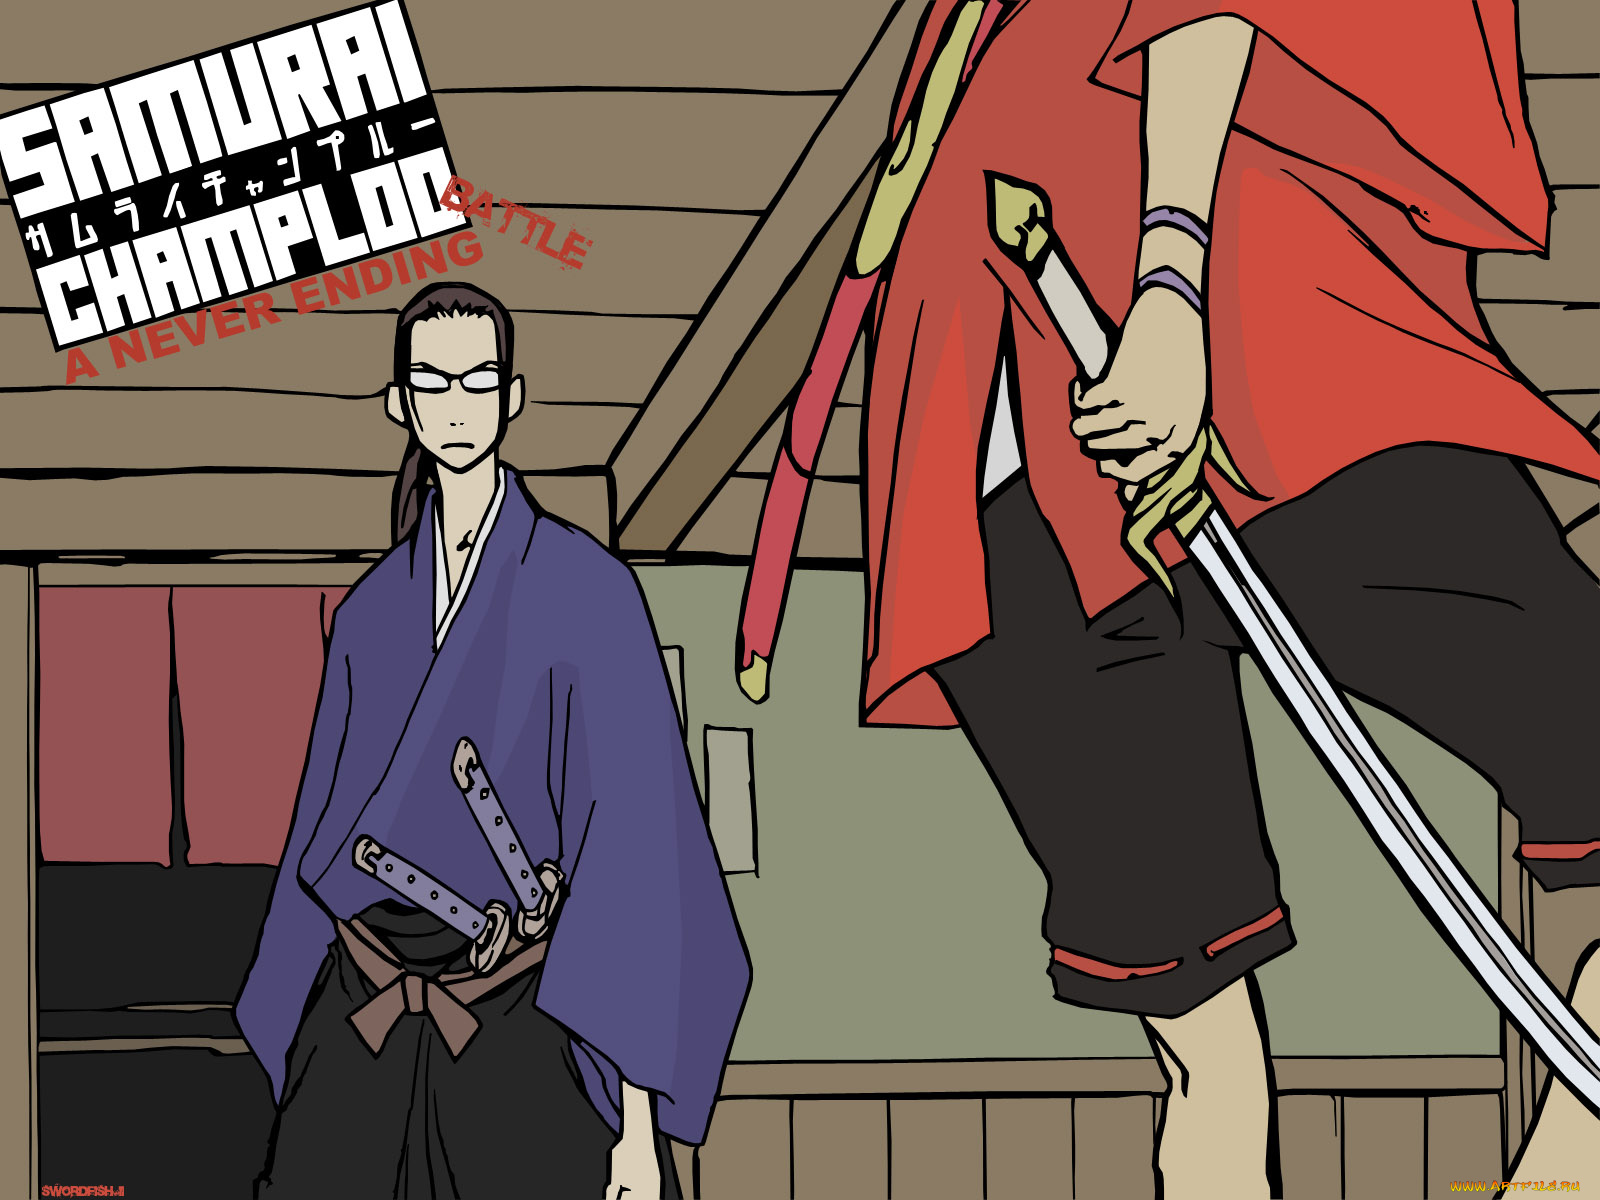 аниме, samurai, champloo